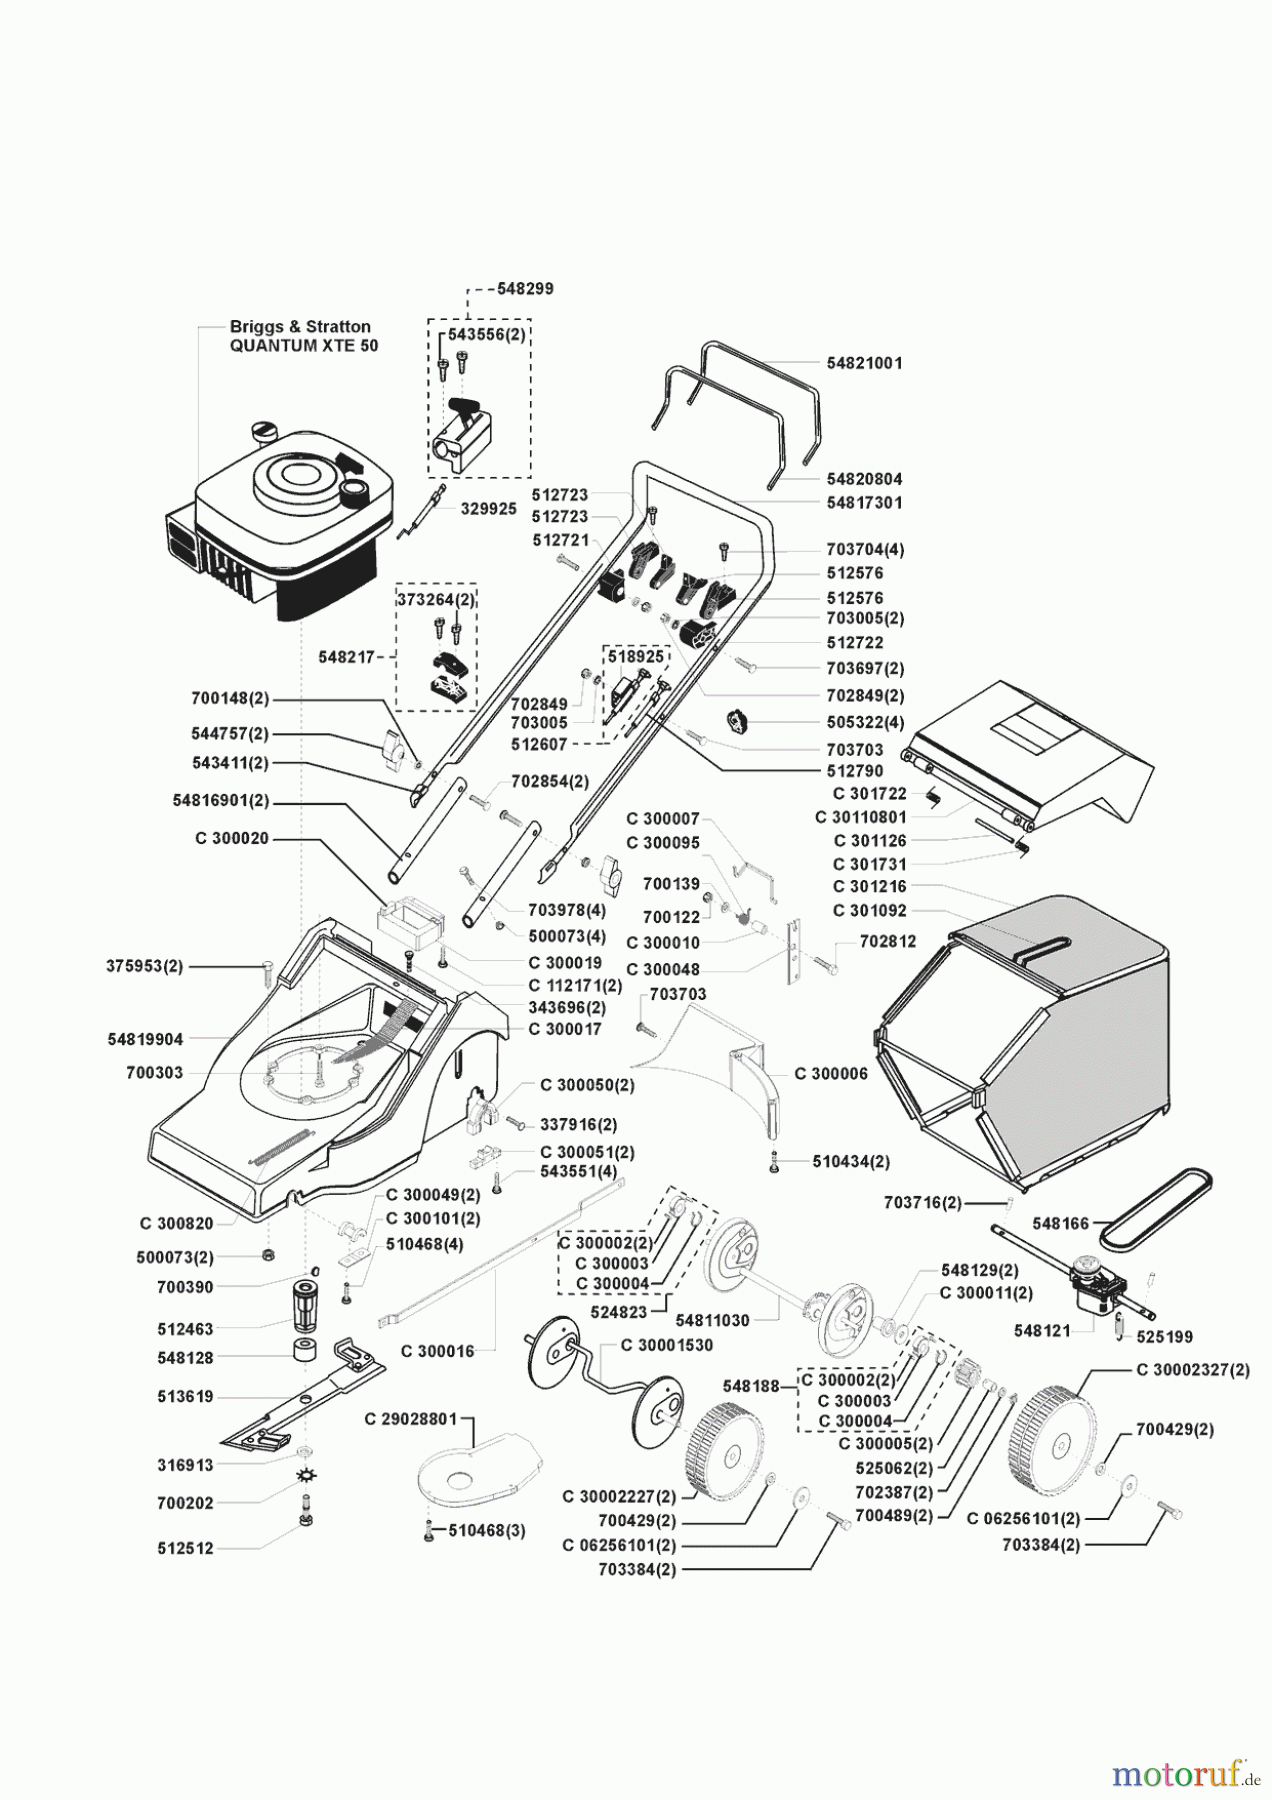  AL-KO Gartentechnik Benzinrasenmäher Highline 465 V vor 02/1998 Seite 1